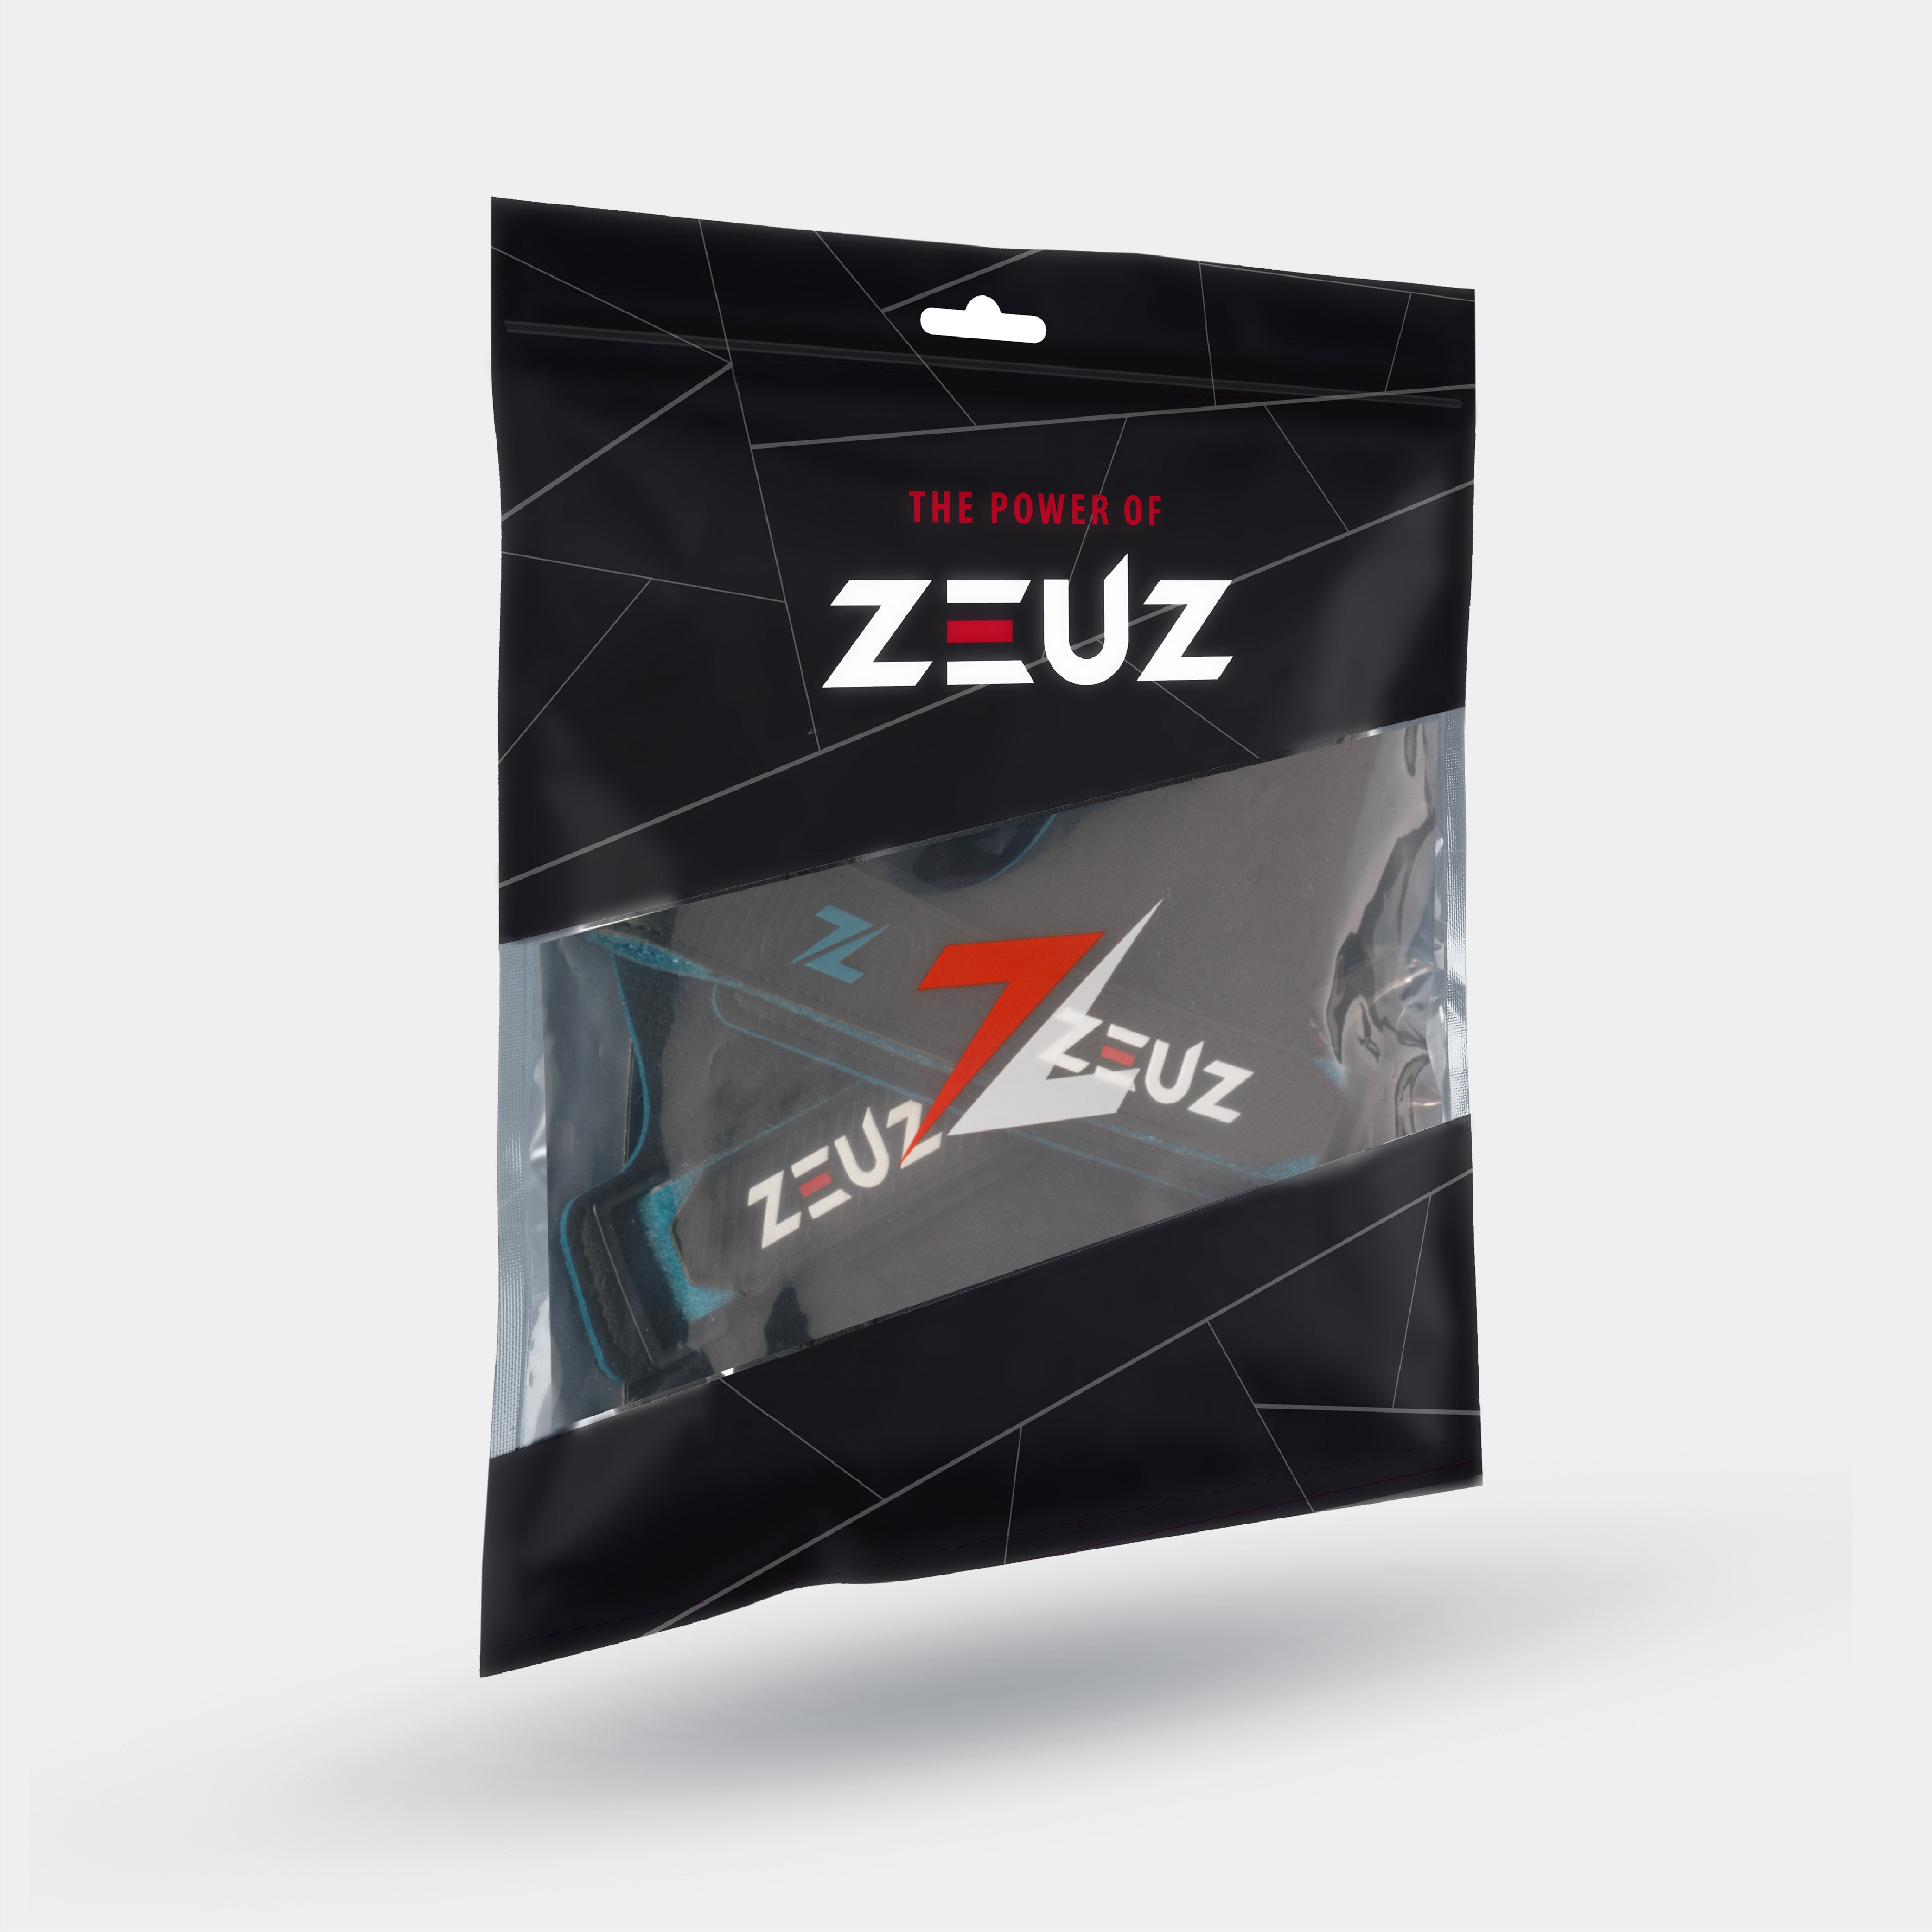 ZEUZ Thunder RX Fitness Mikro faser Grips